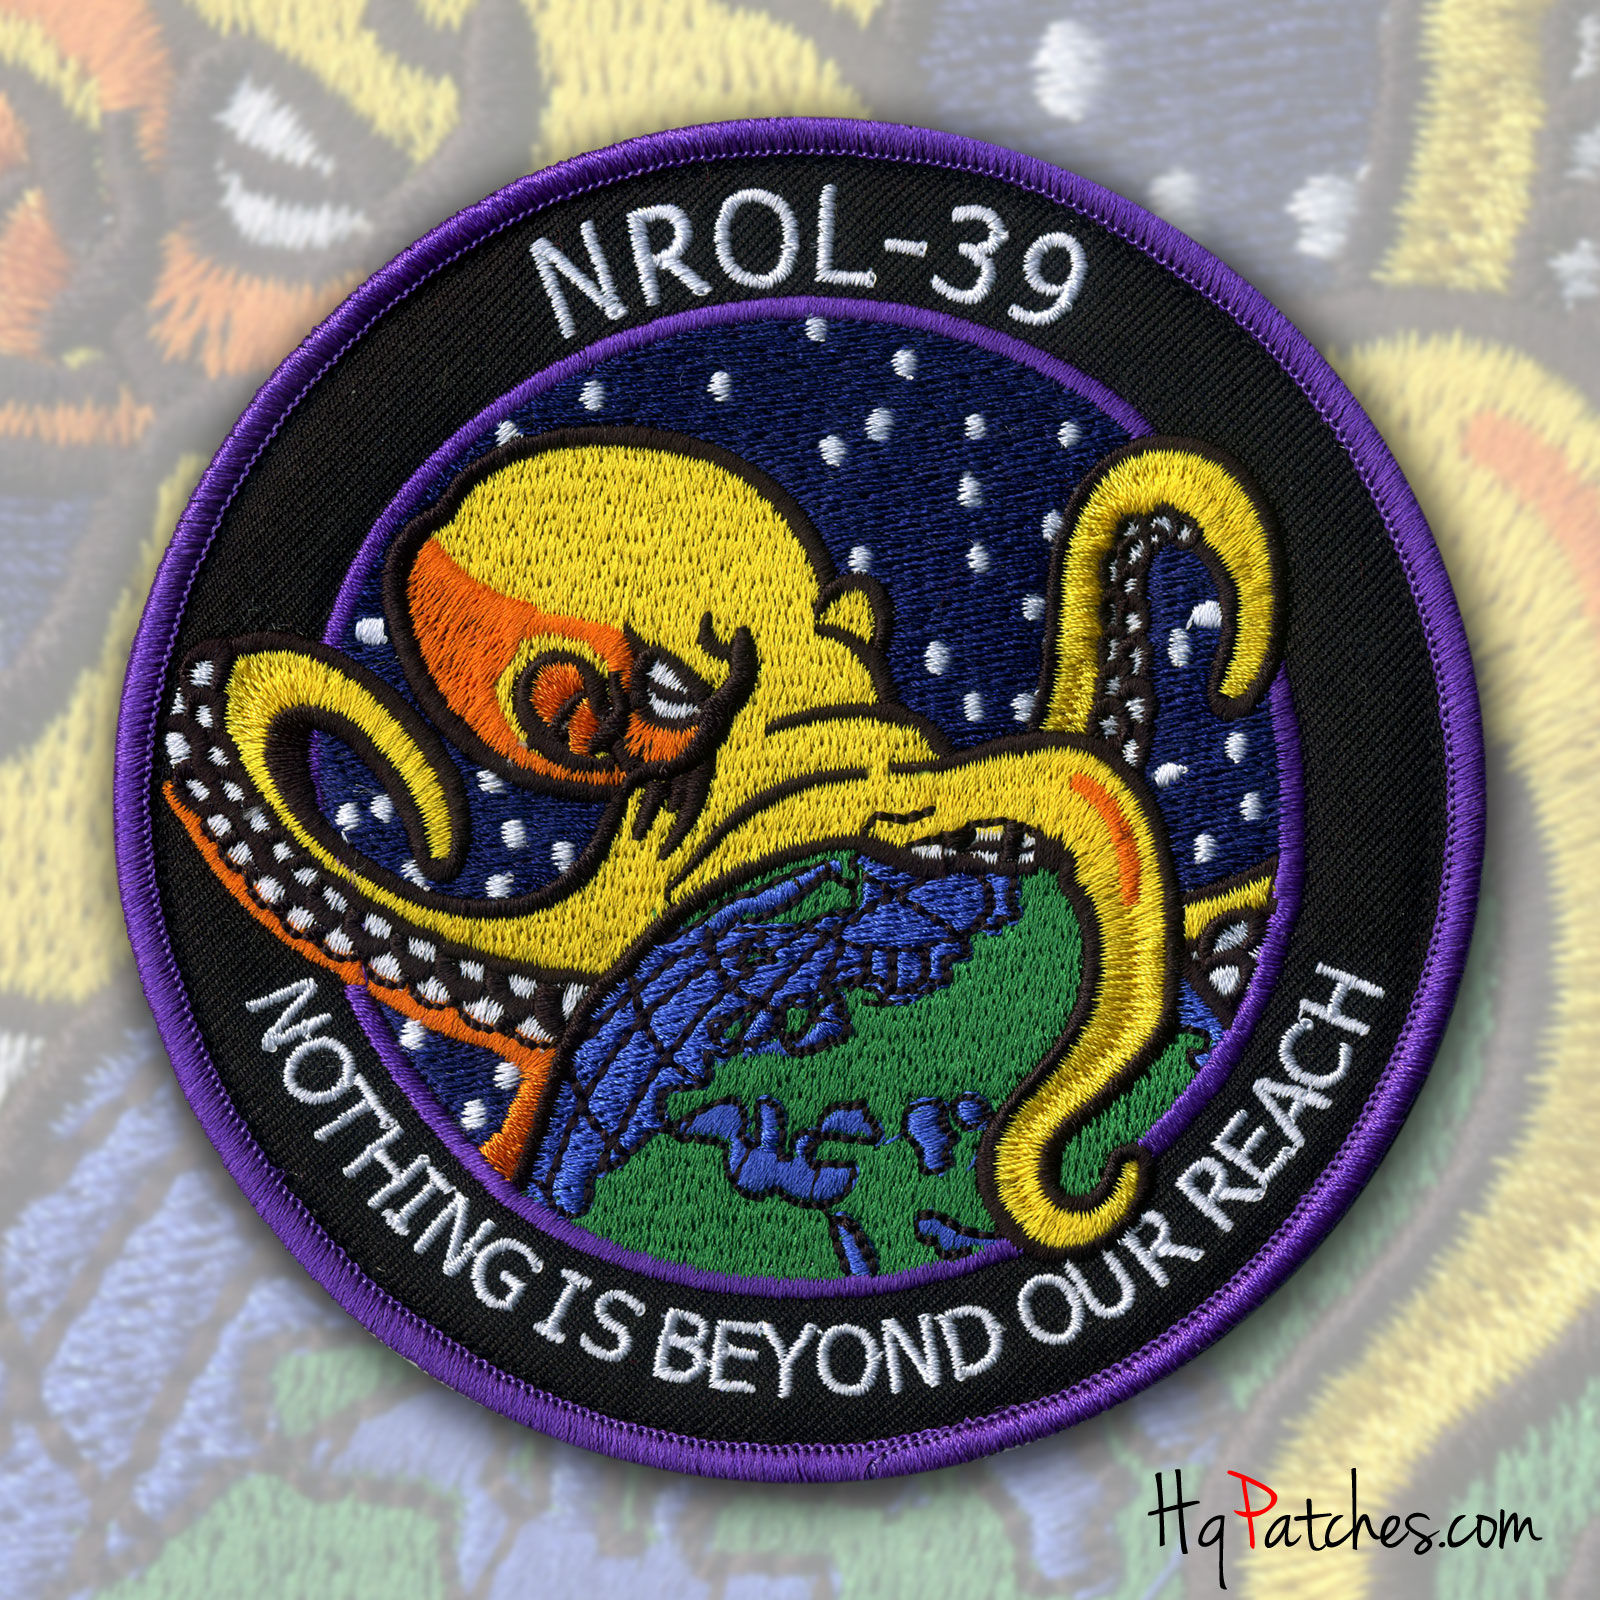 Emblem of USA-237 mission AKA NRO Launch 39 or NROL-39